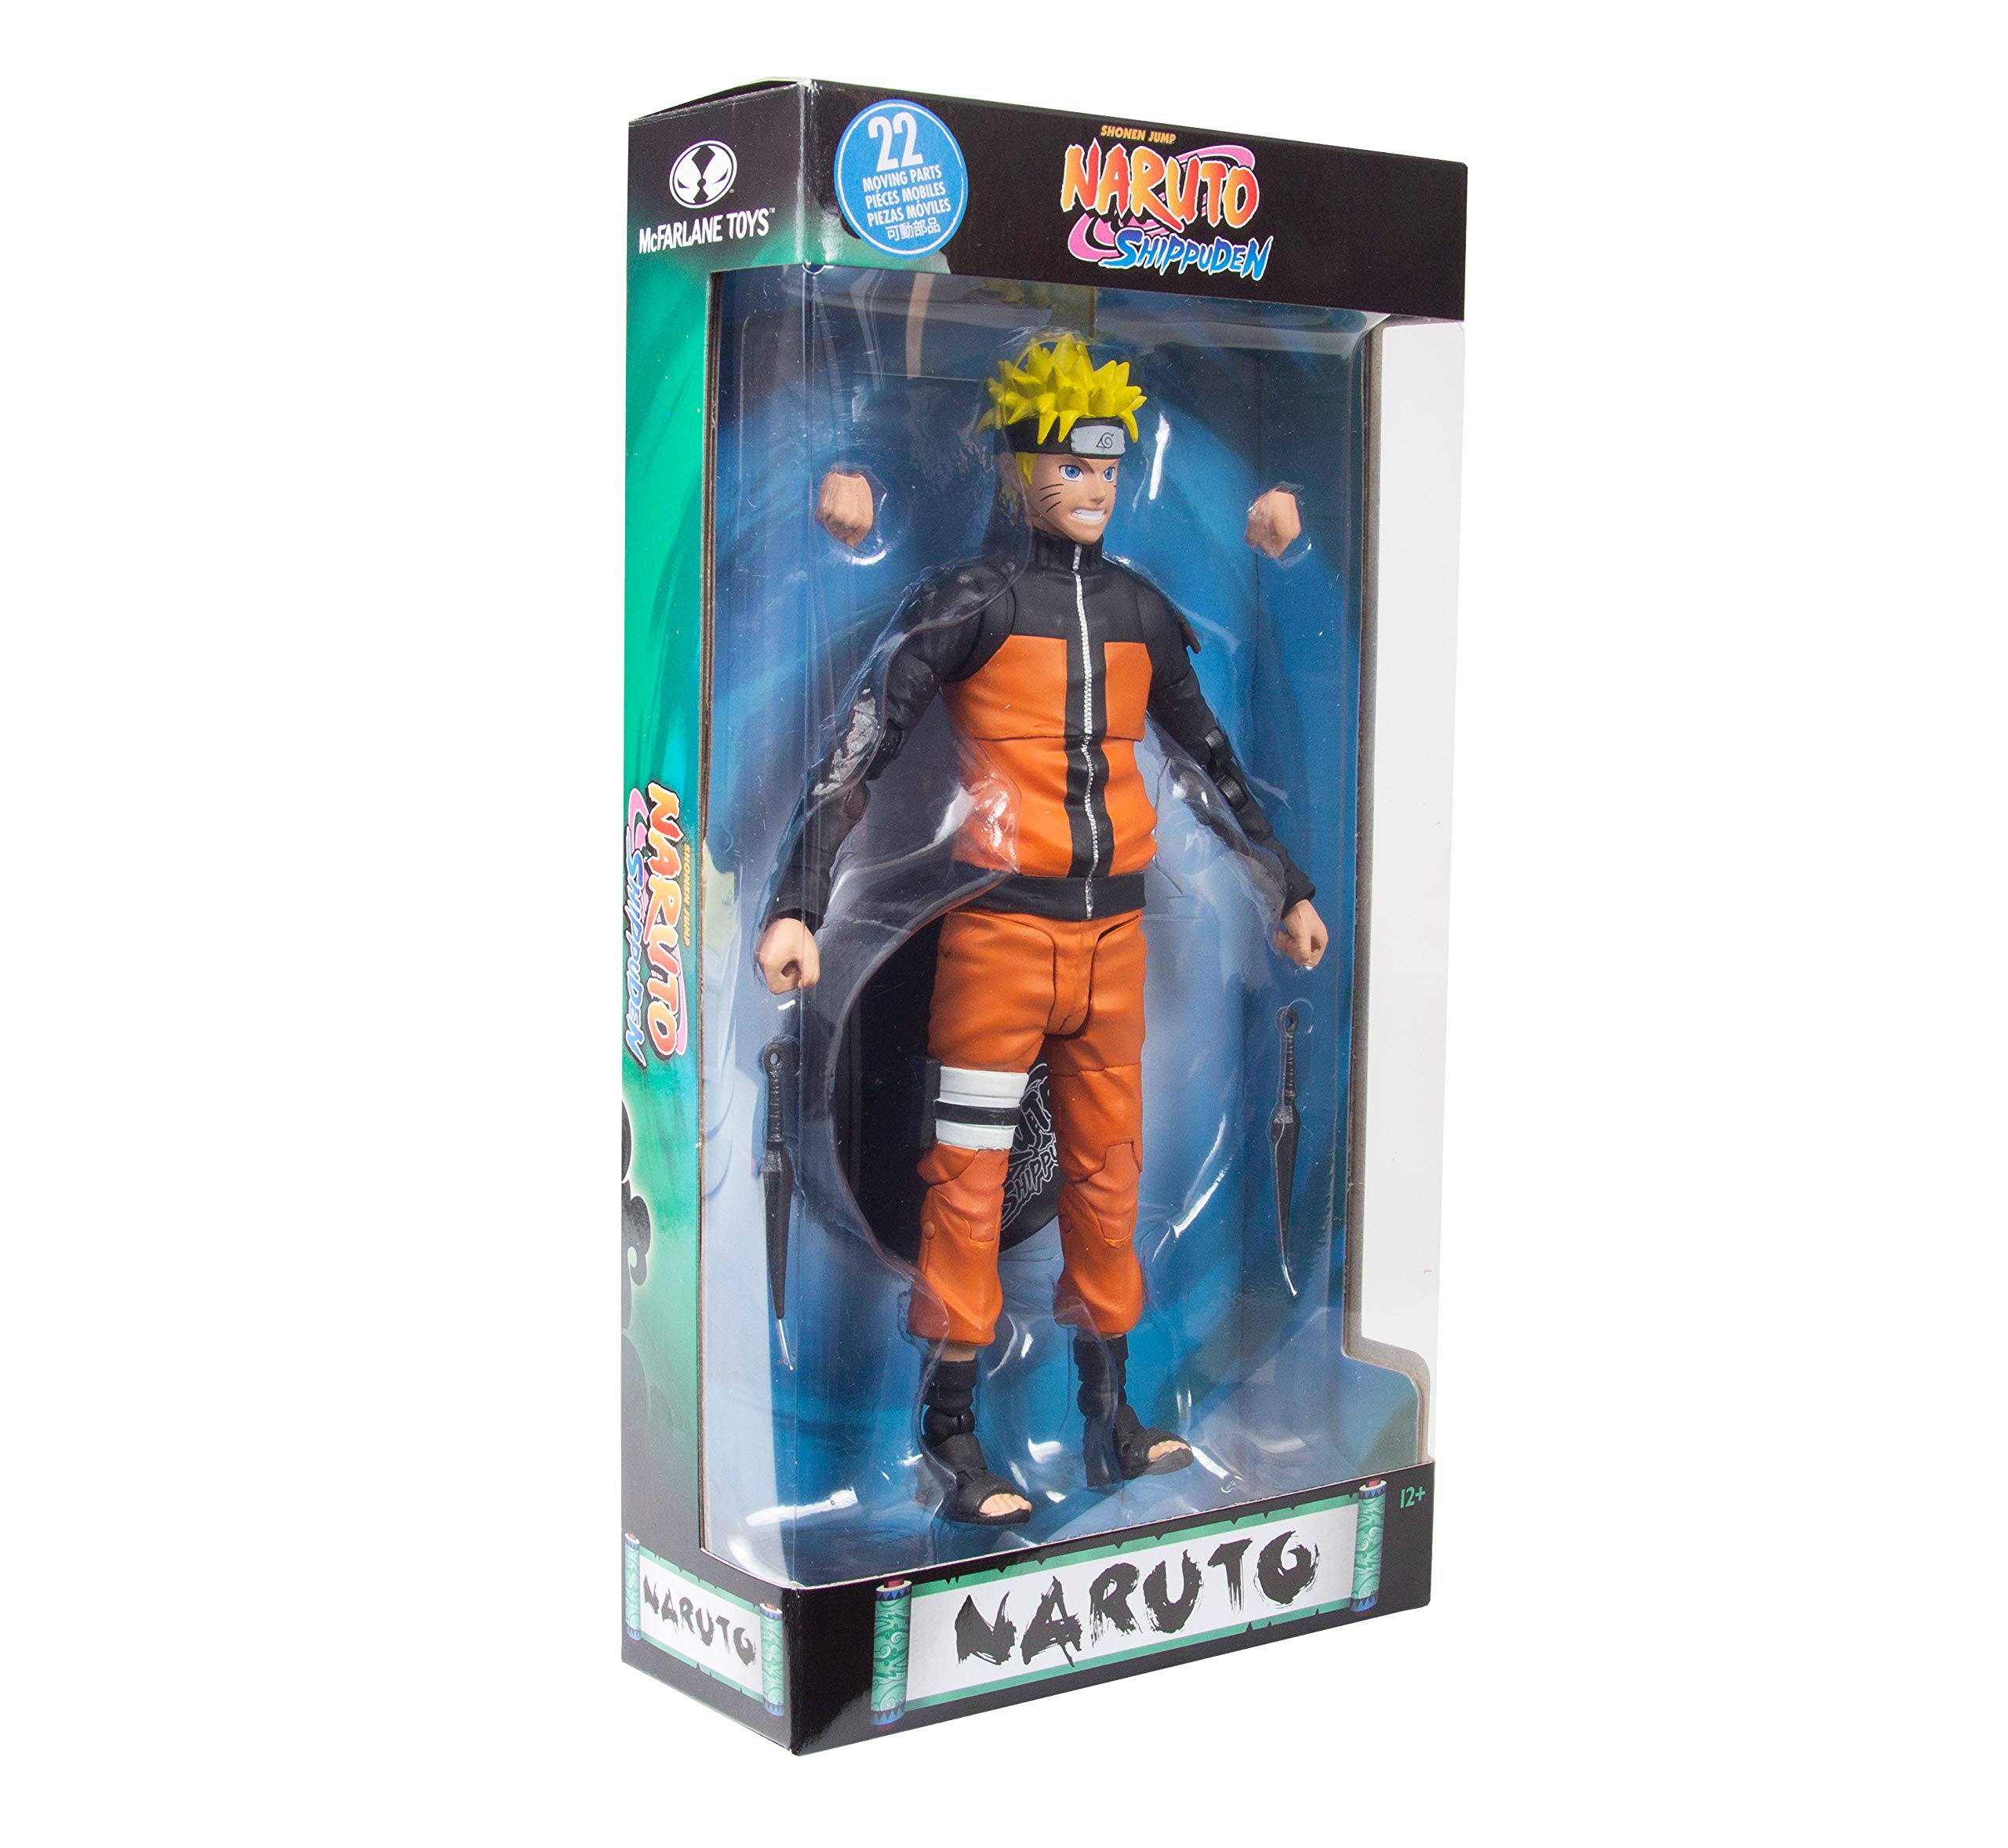 Mua McFarlane Toys Naruto Action Figure, Multi trên Amazon Mỹ chính hãng  2023 | Fado